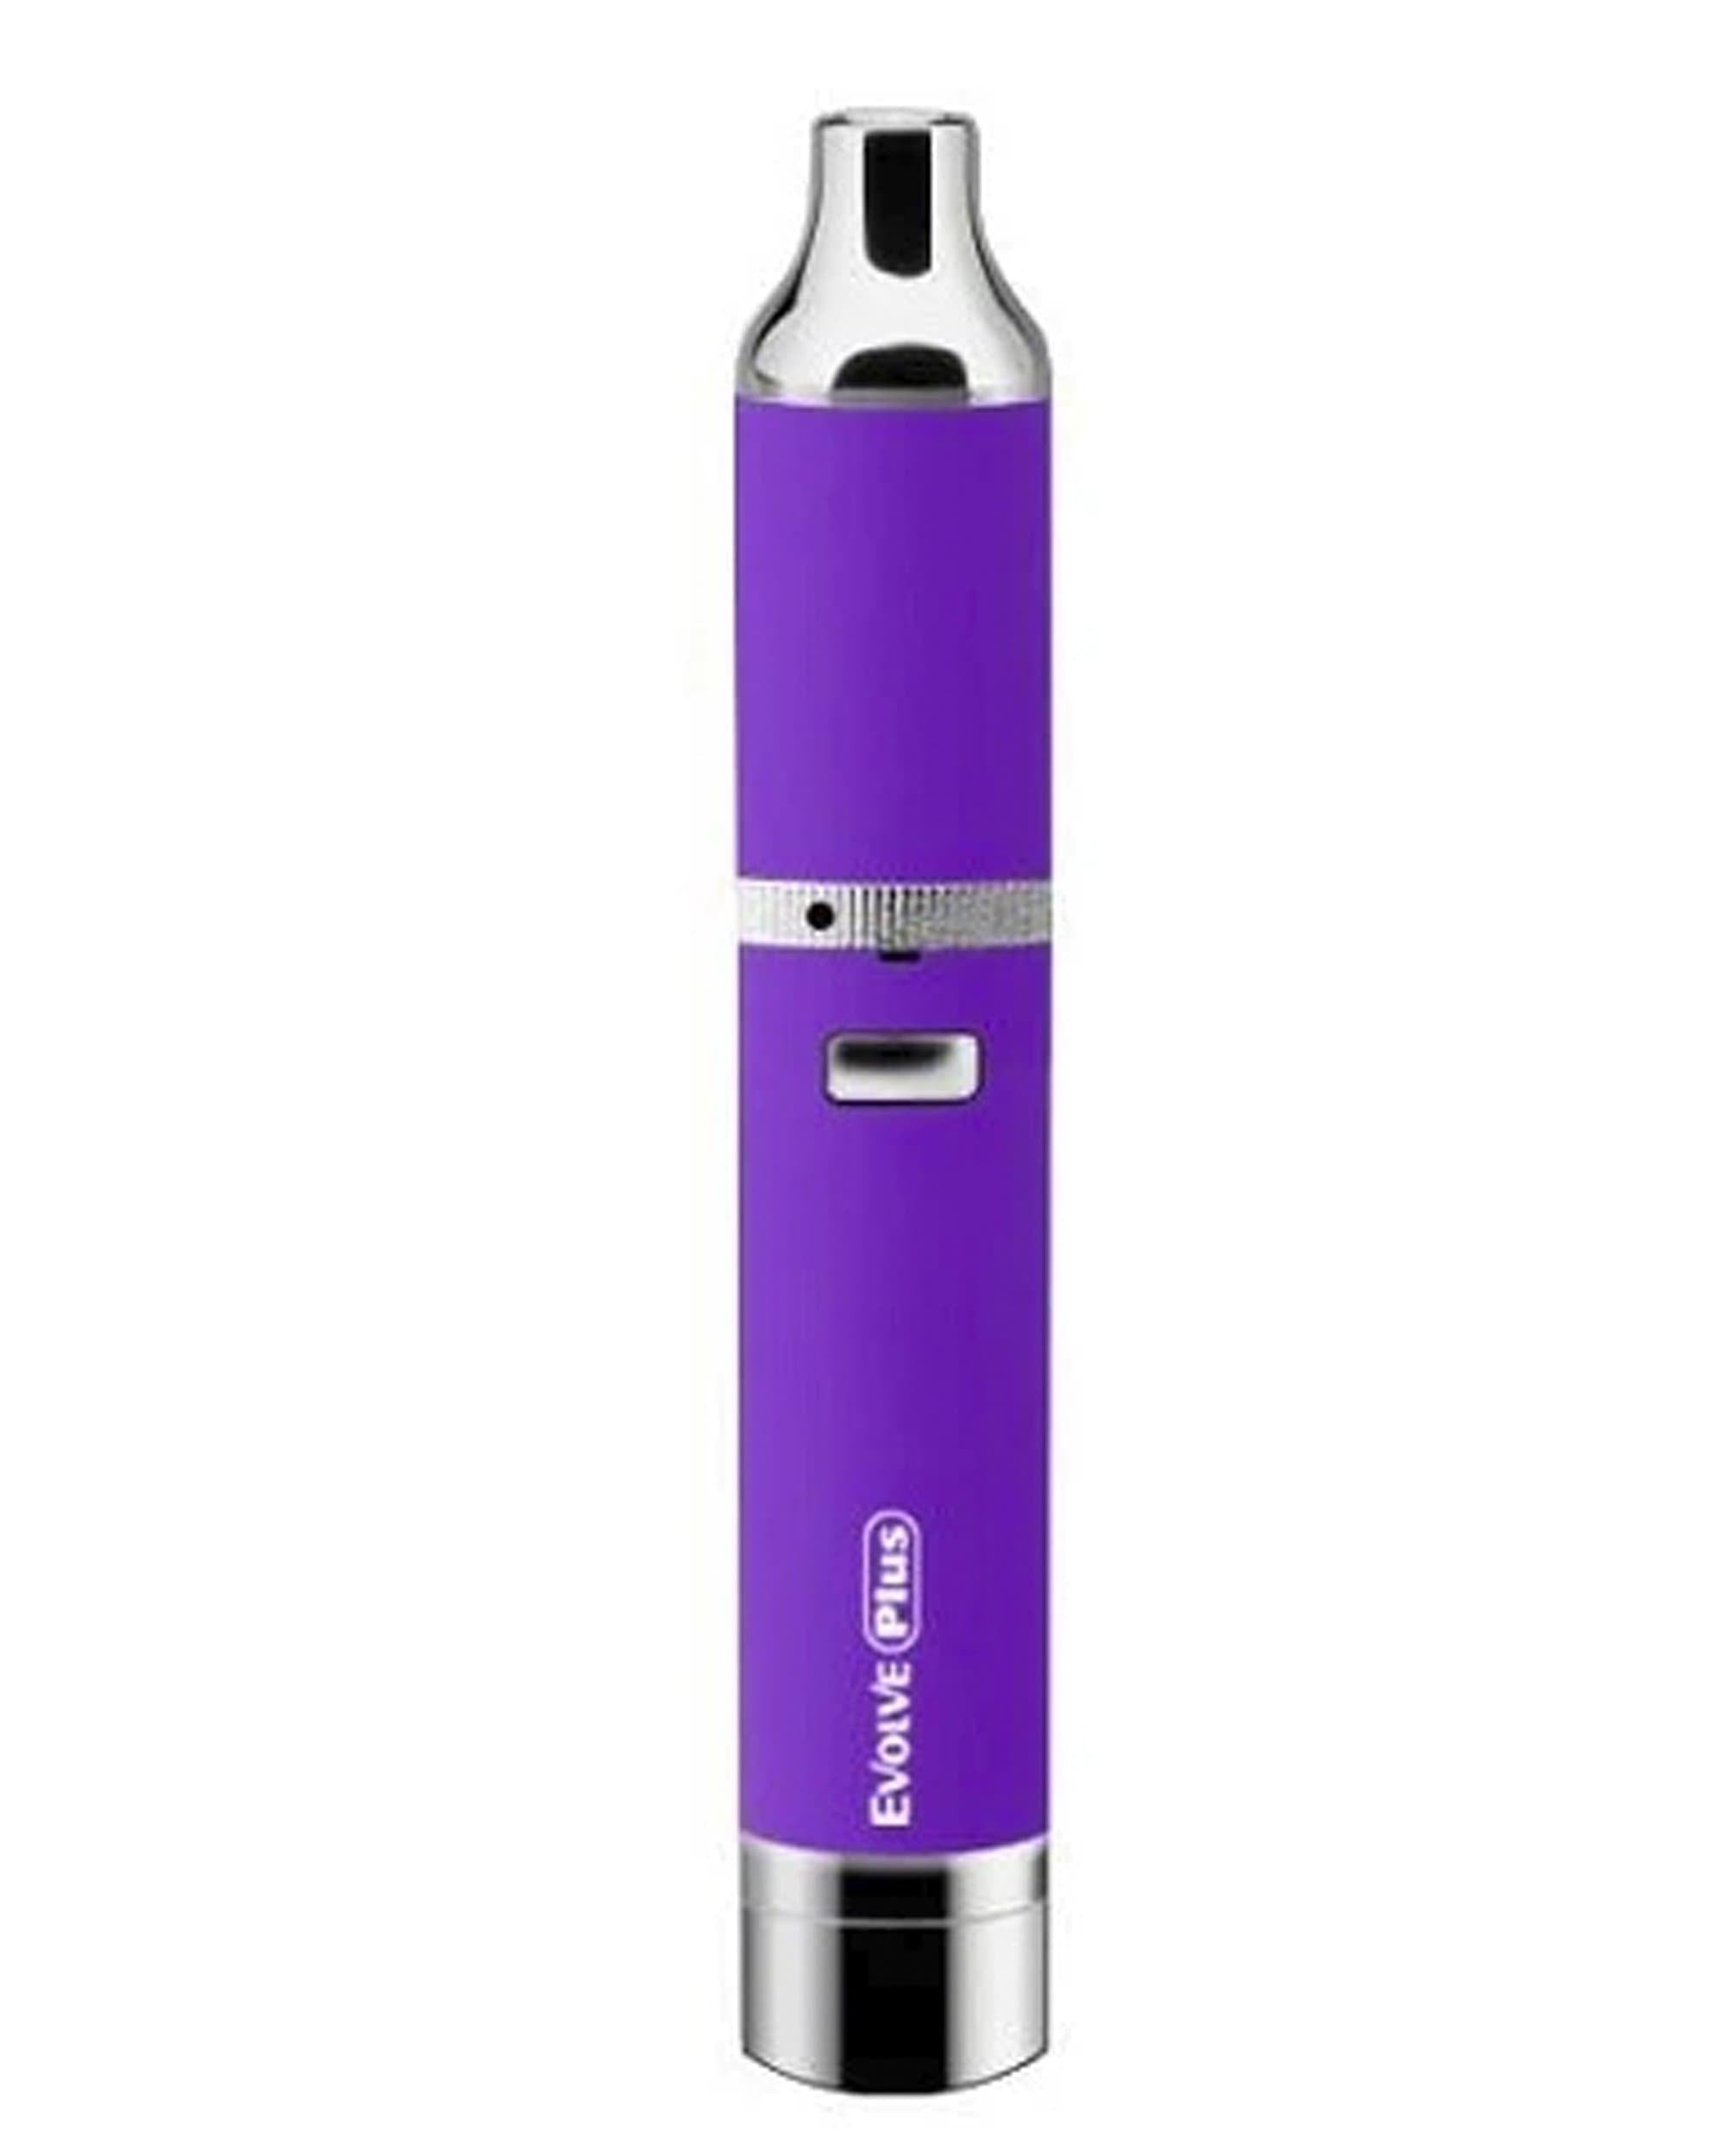 Evolve Plus Vaporizer Pen